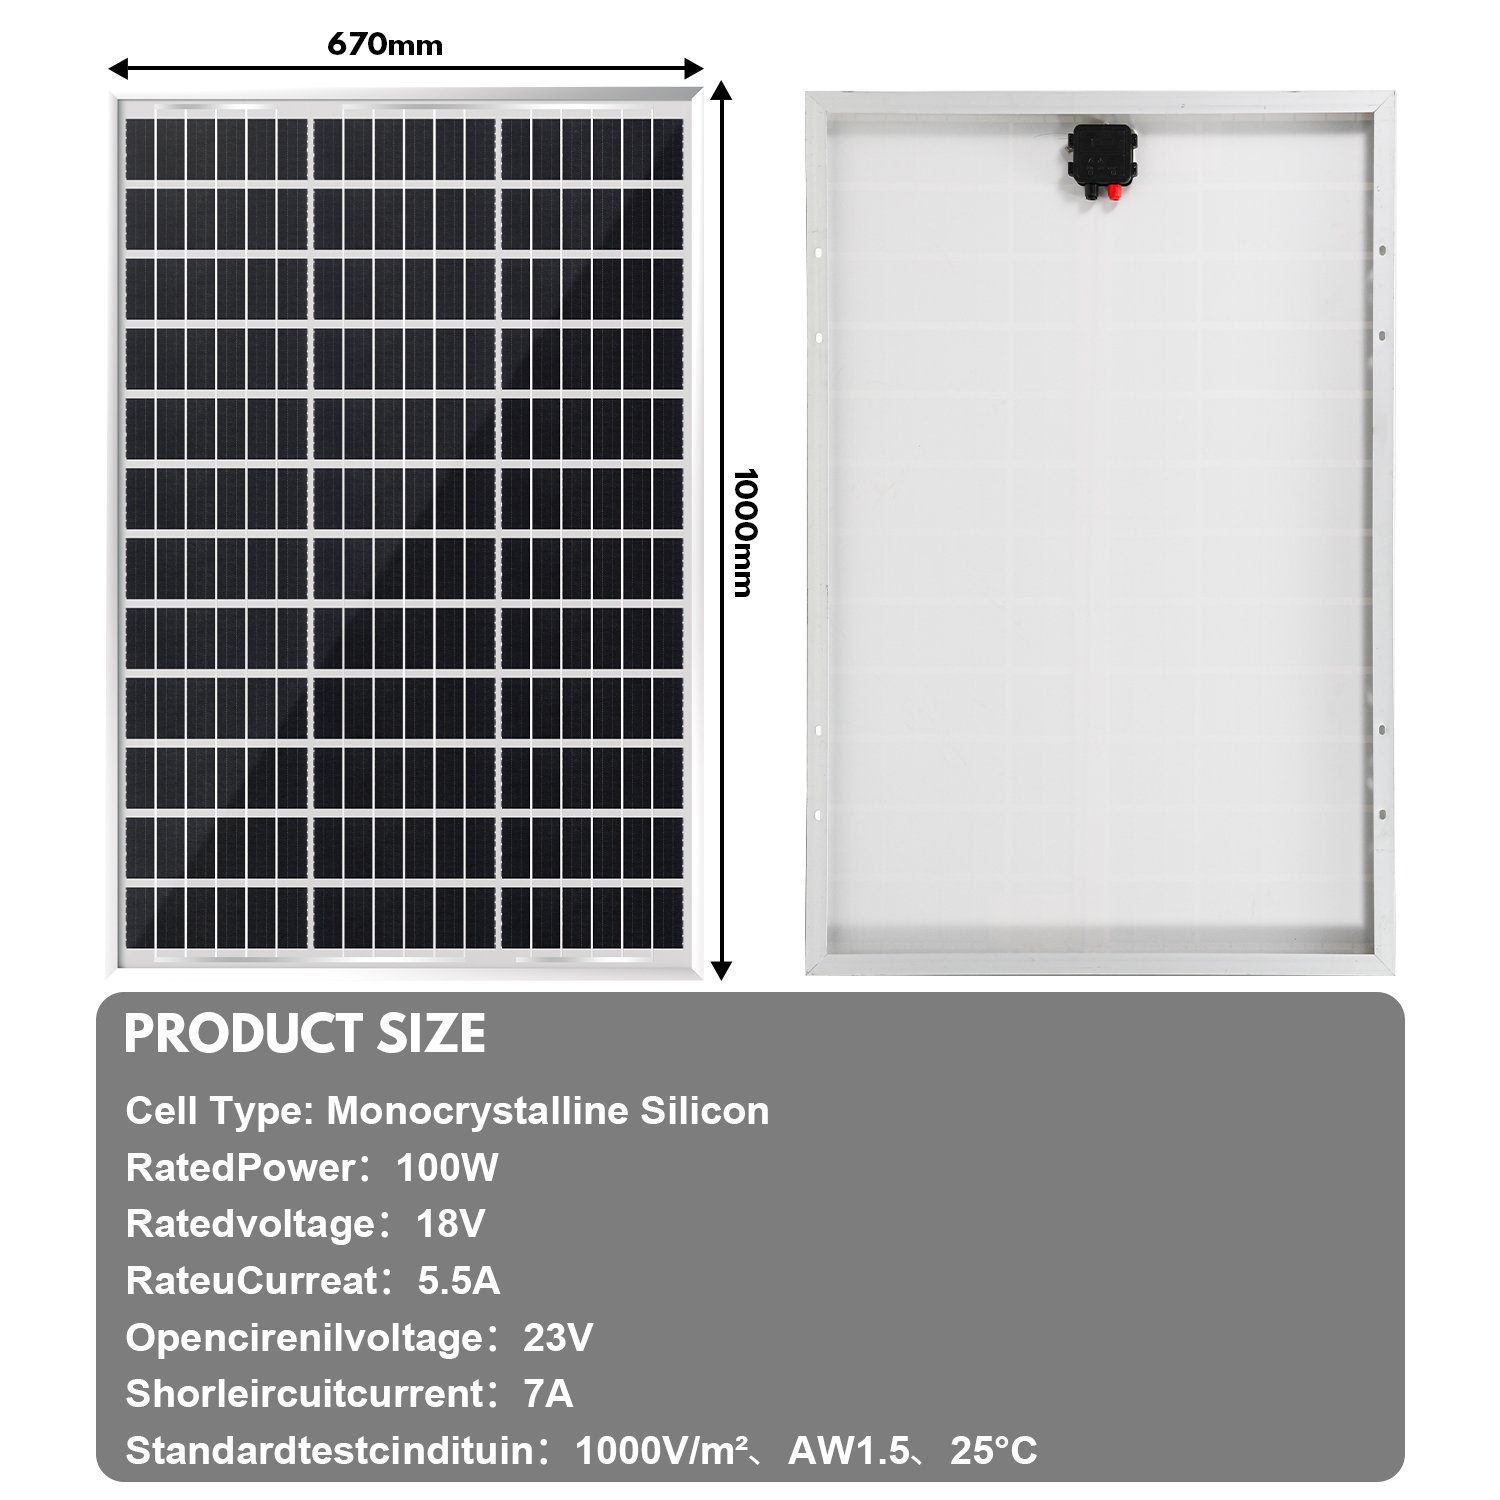 Solarpanel W 100 Solaranlage Solarladegerät, Gimisgu Solarpanel 12V, 100W Solaranlage